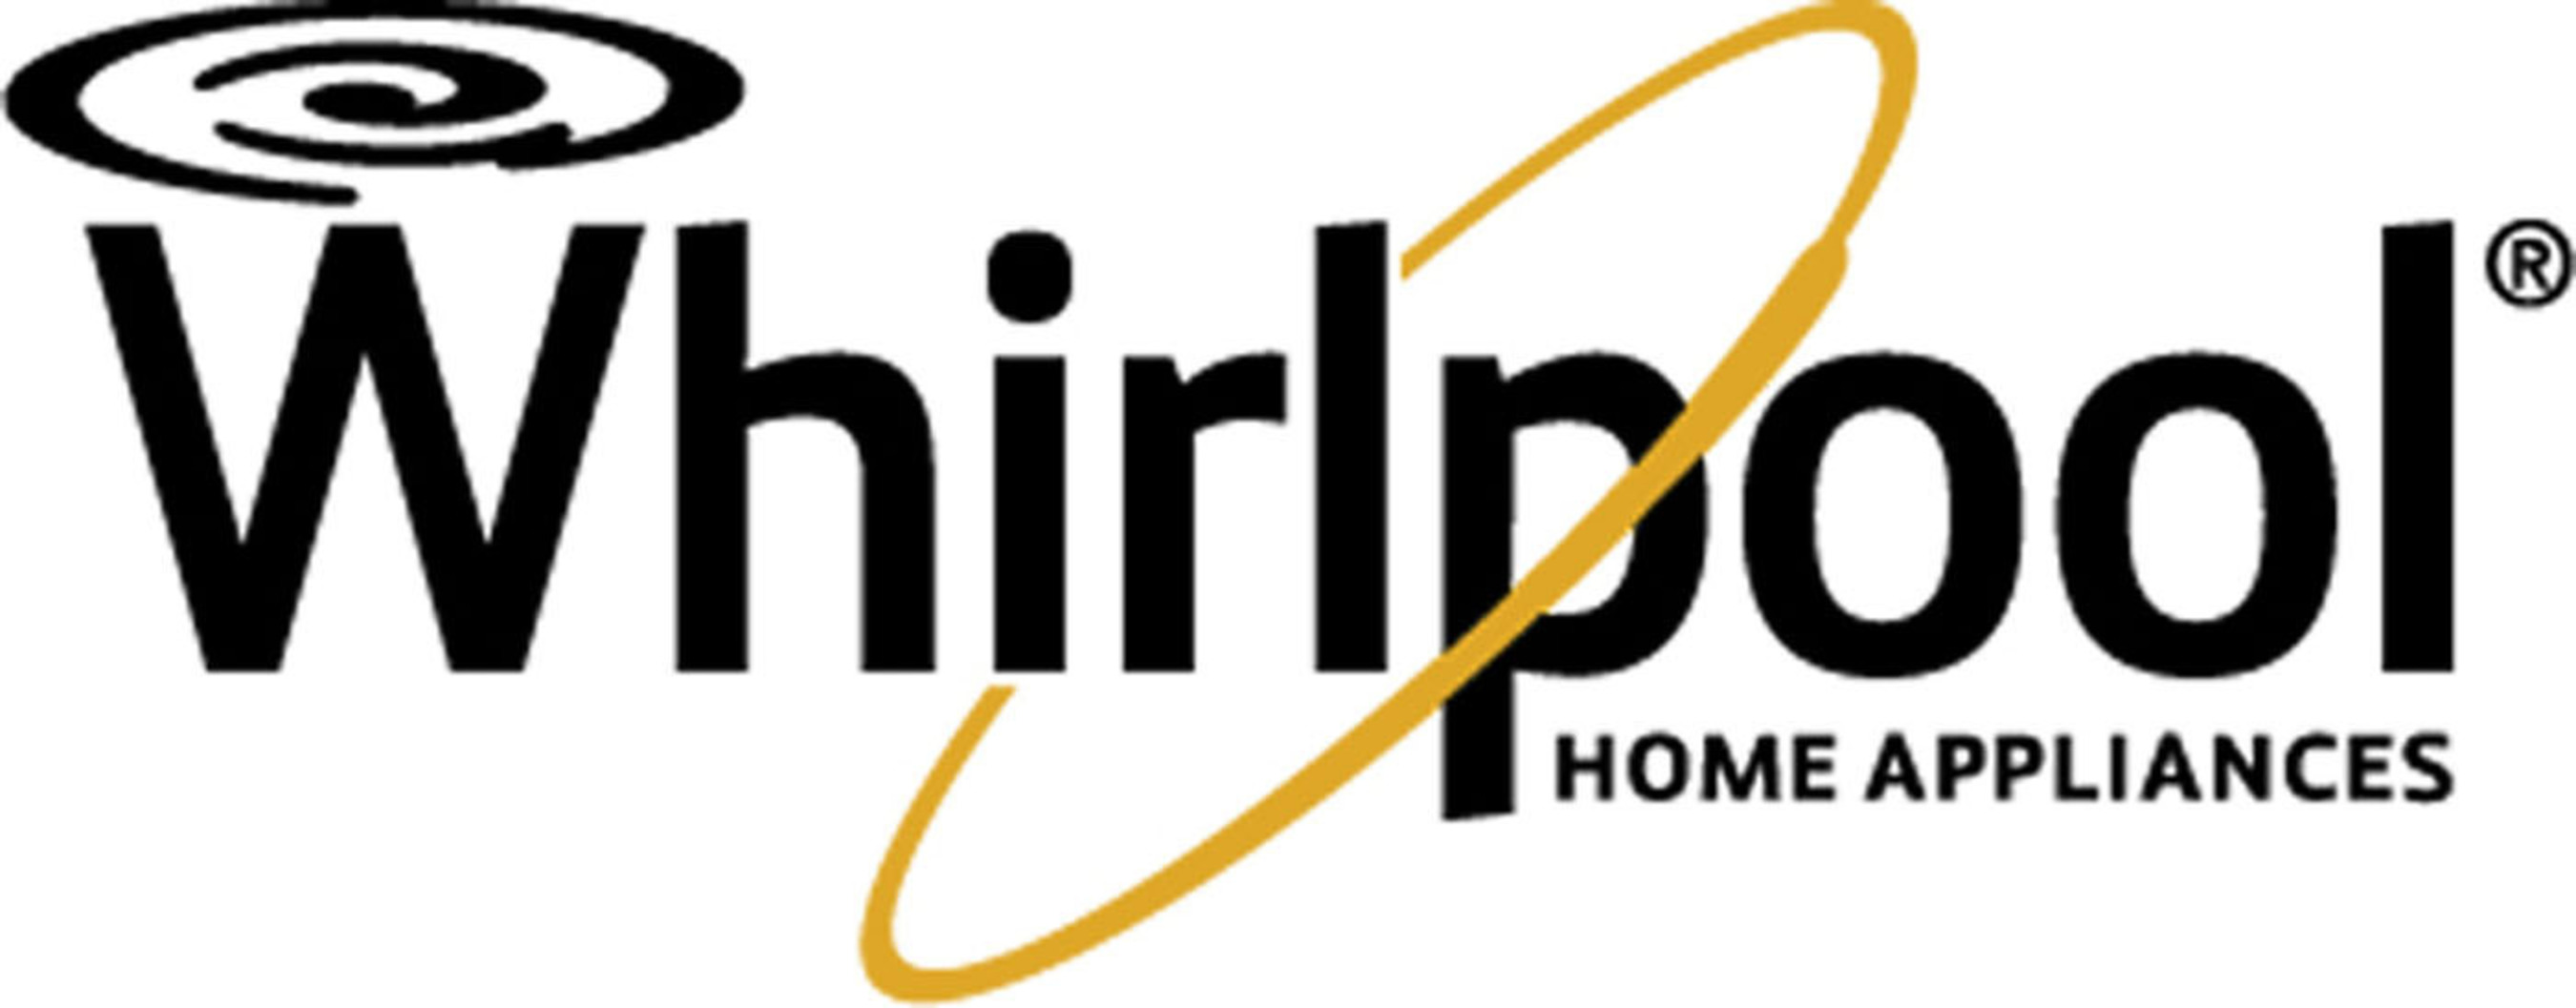 Whirlpool Brands Logo. (PRNewsFoto/Whirlpool Corporation) (PRNewsFoto/)